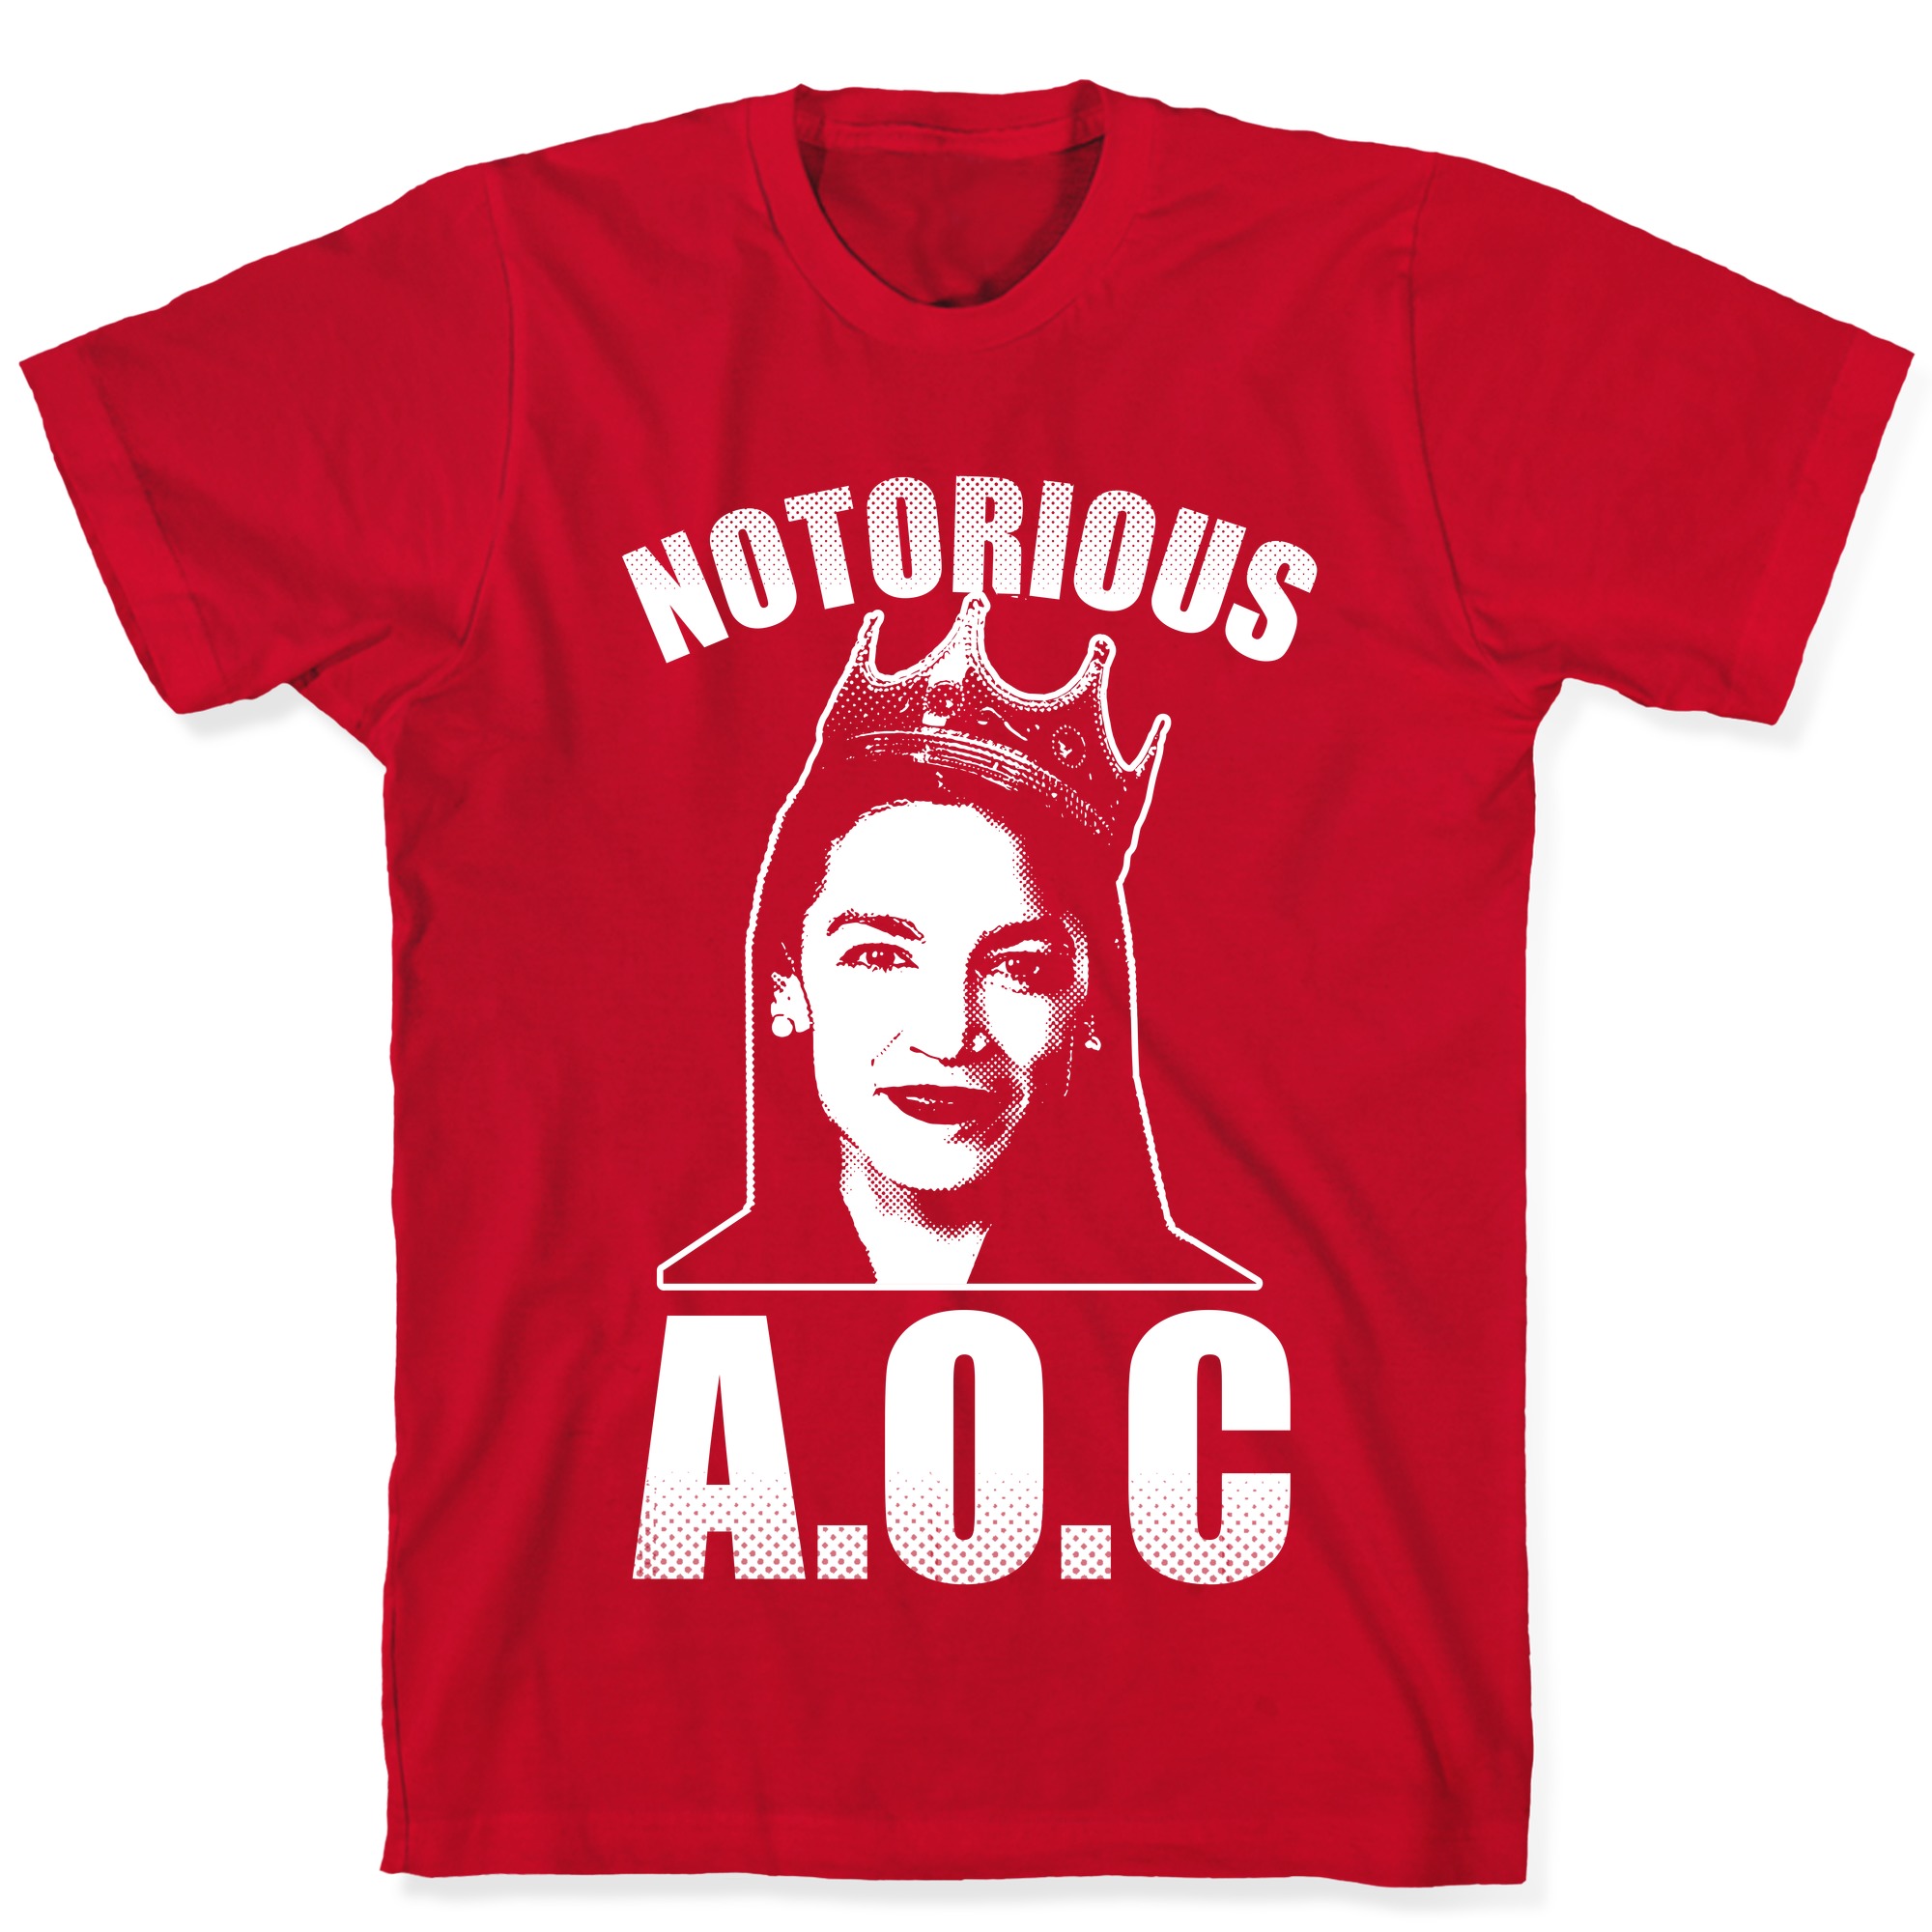 notorious aoc